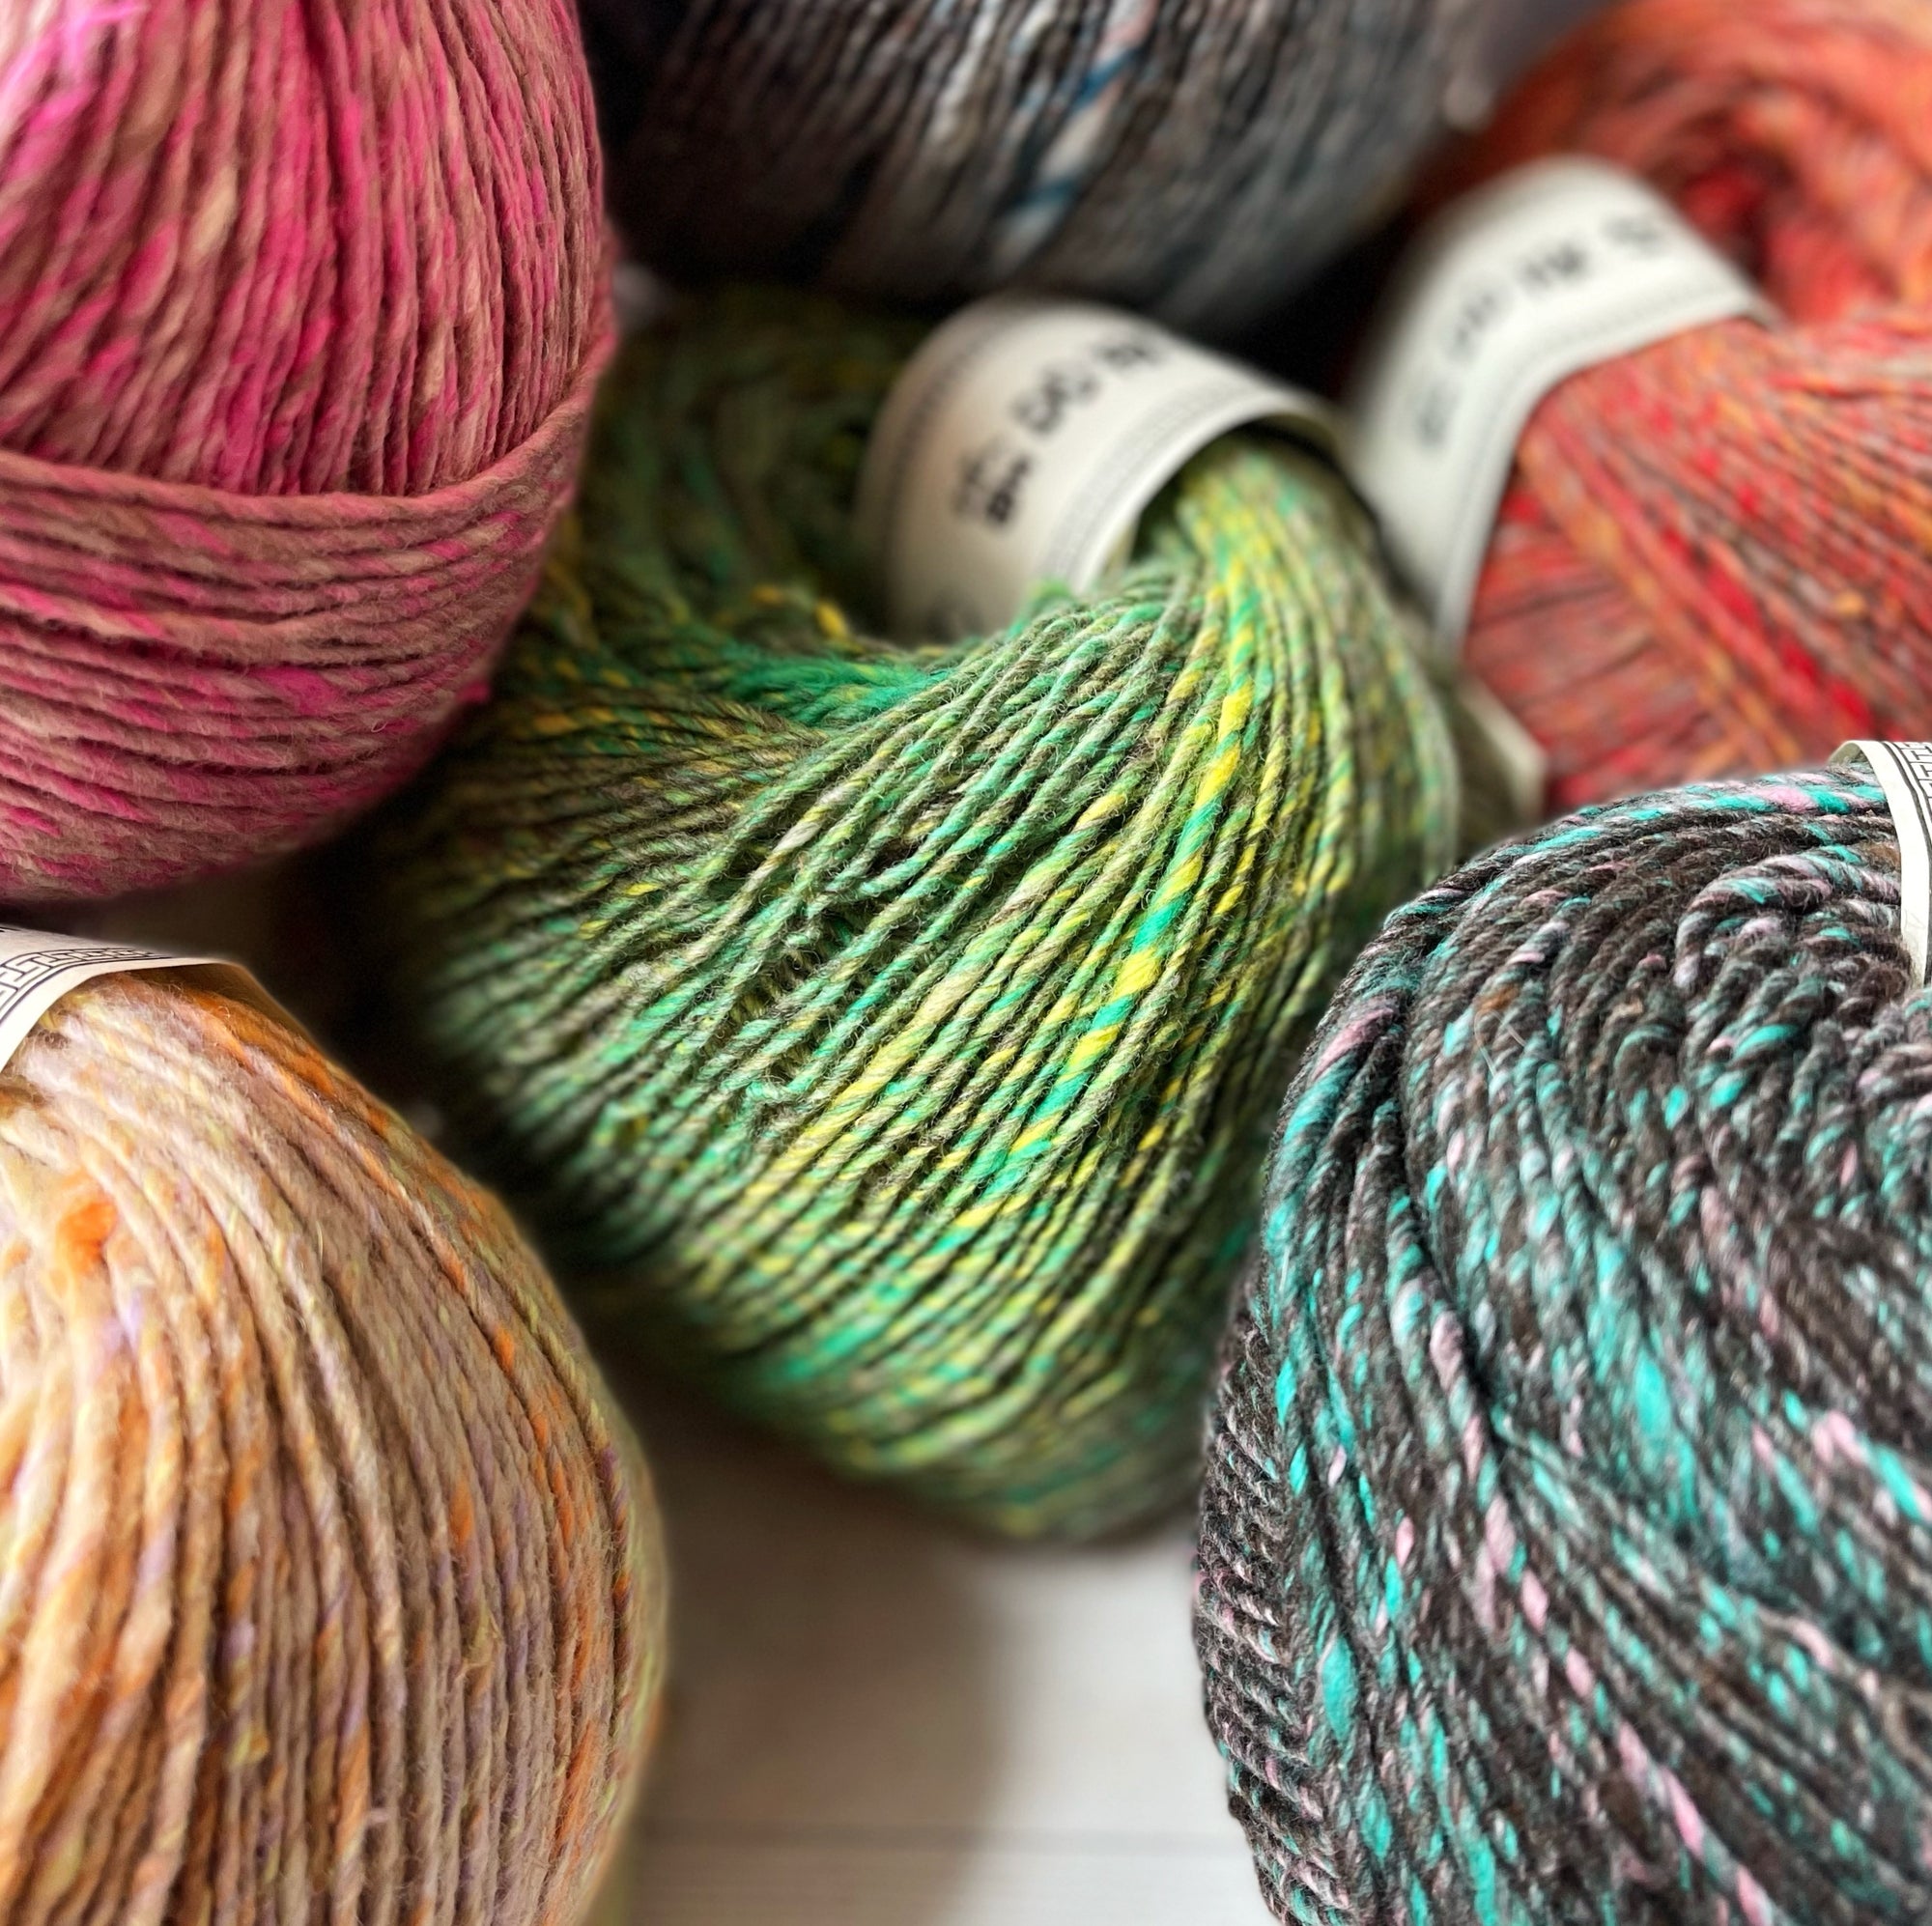 Mercerised Cotton Yarn by Kotton - 3 ply - Black 22, Magic Needles